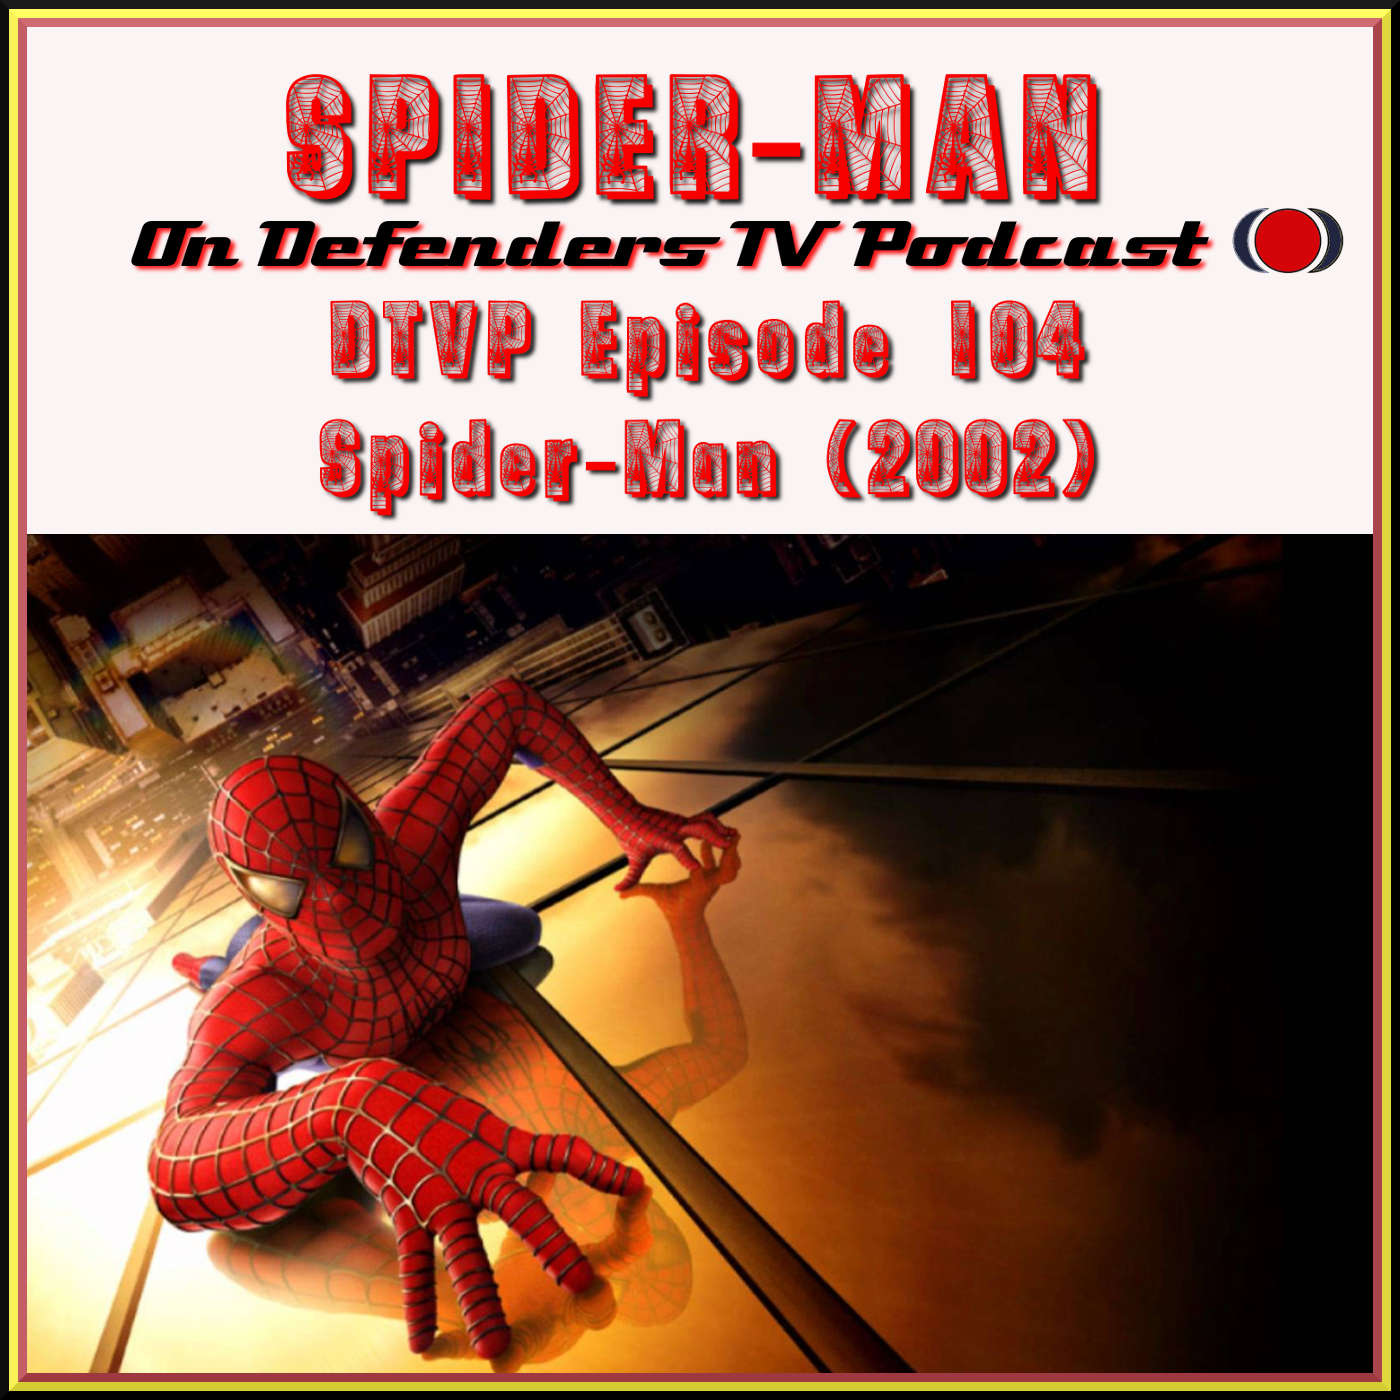 Spider-Man 2002 Movie Review